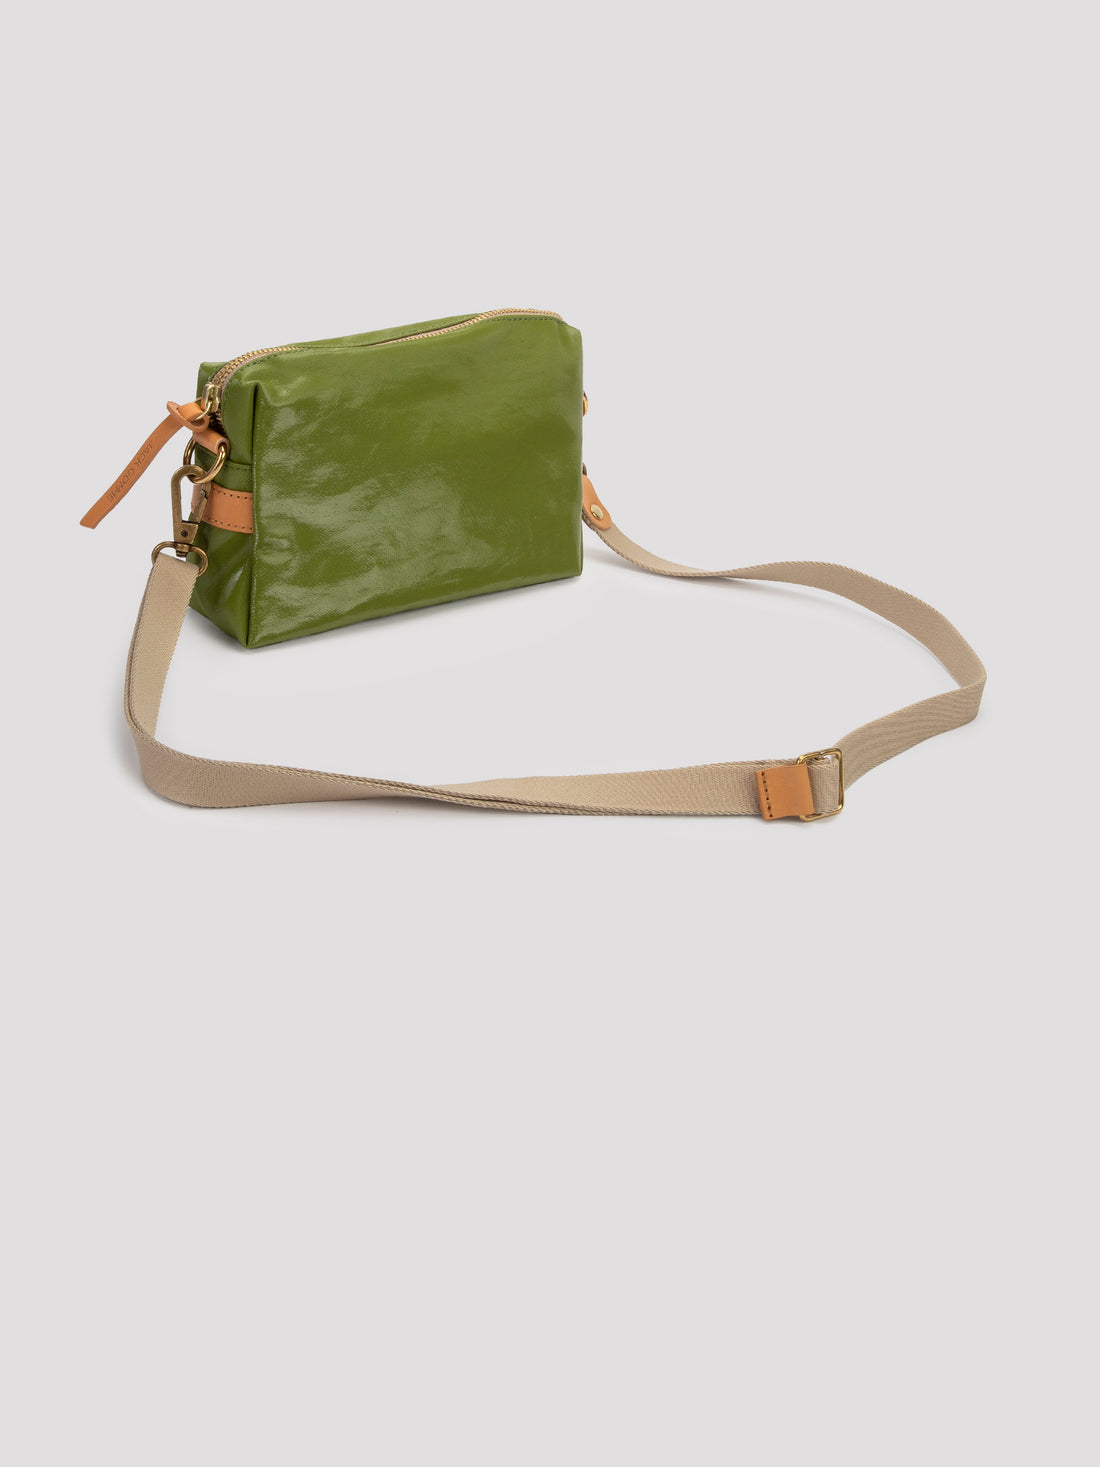 Mini besace green bag - Jack Gomme